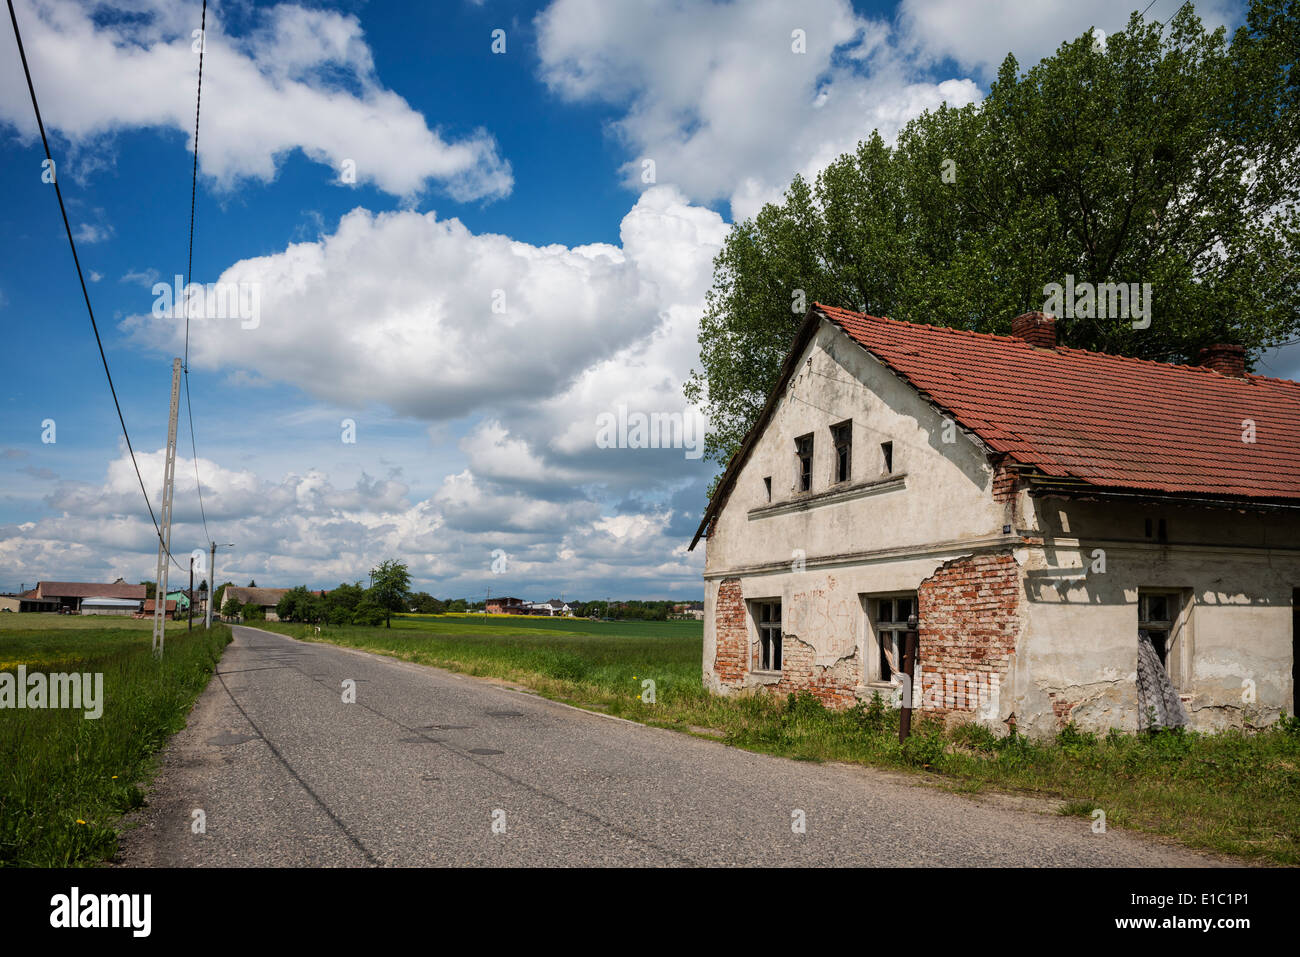 Abandoned building, Grabine - Grabina, Prudnik County, Opole Voivodship, Silesia, Poland Stock Photo